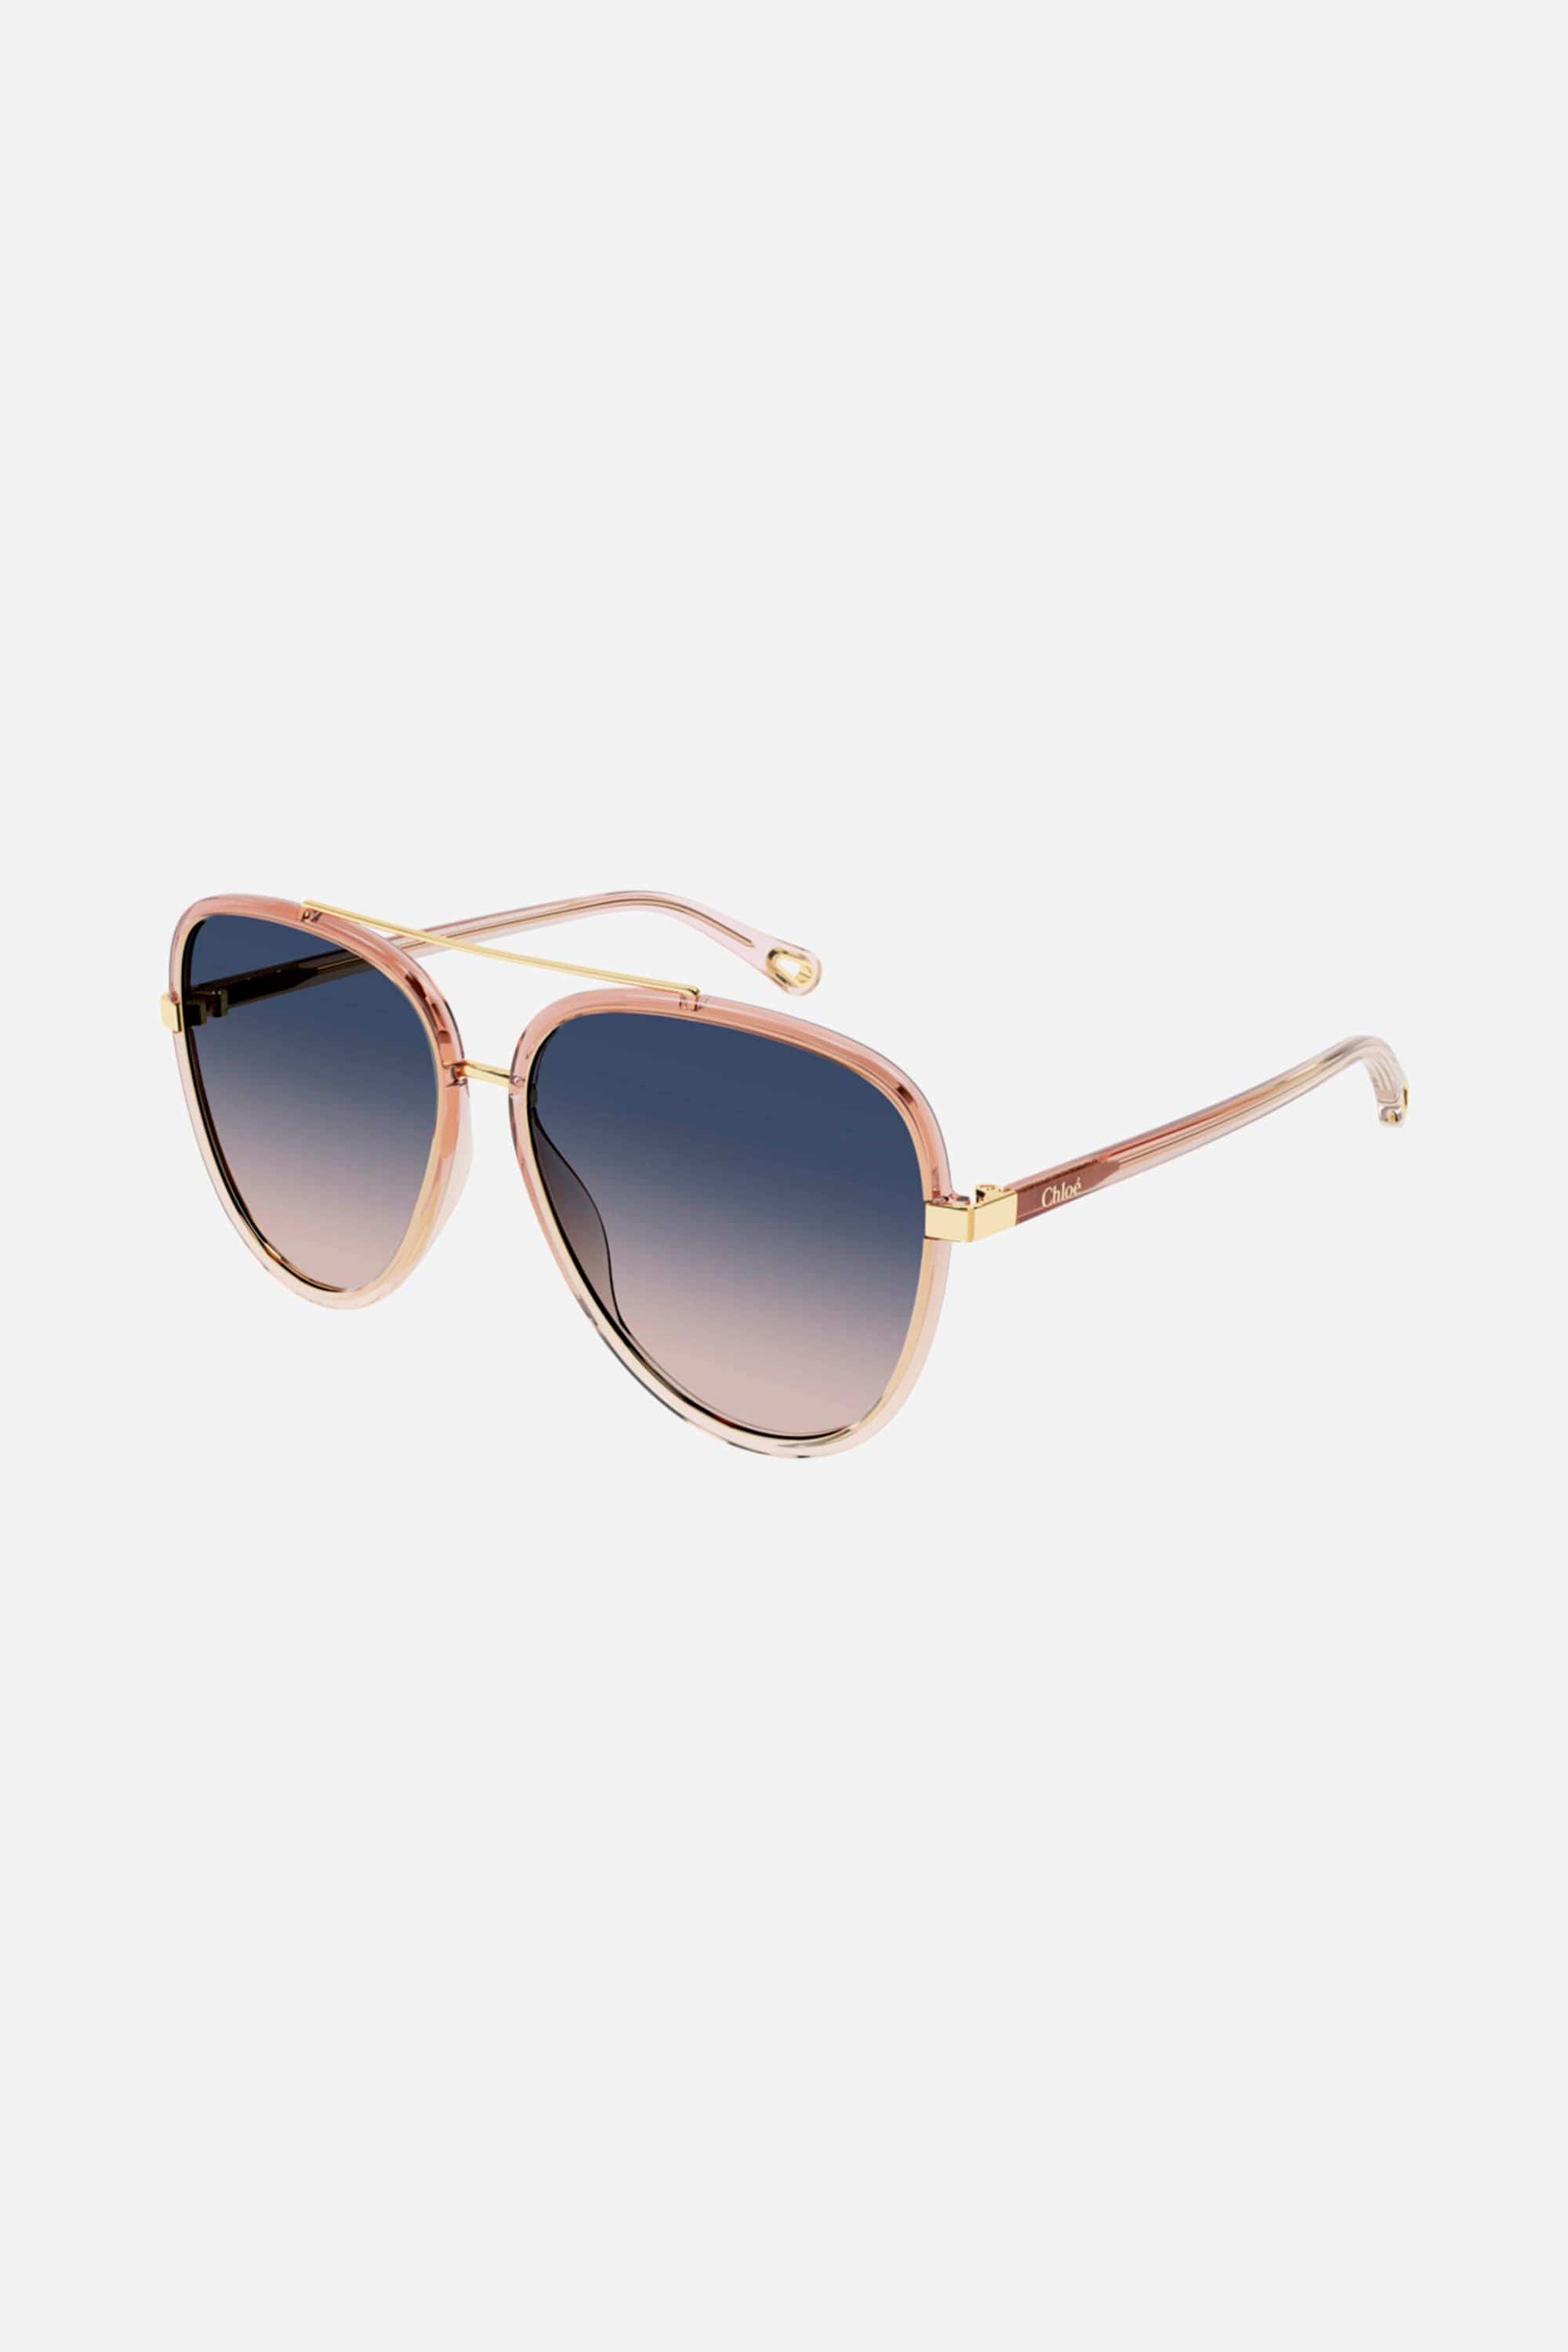 Chloe femenine combined peach sunglasses - Eyewear Club